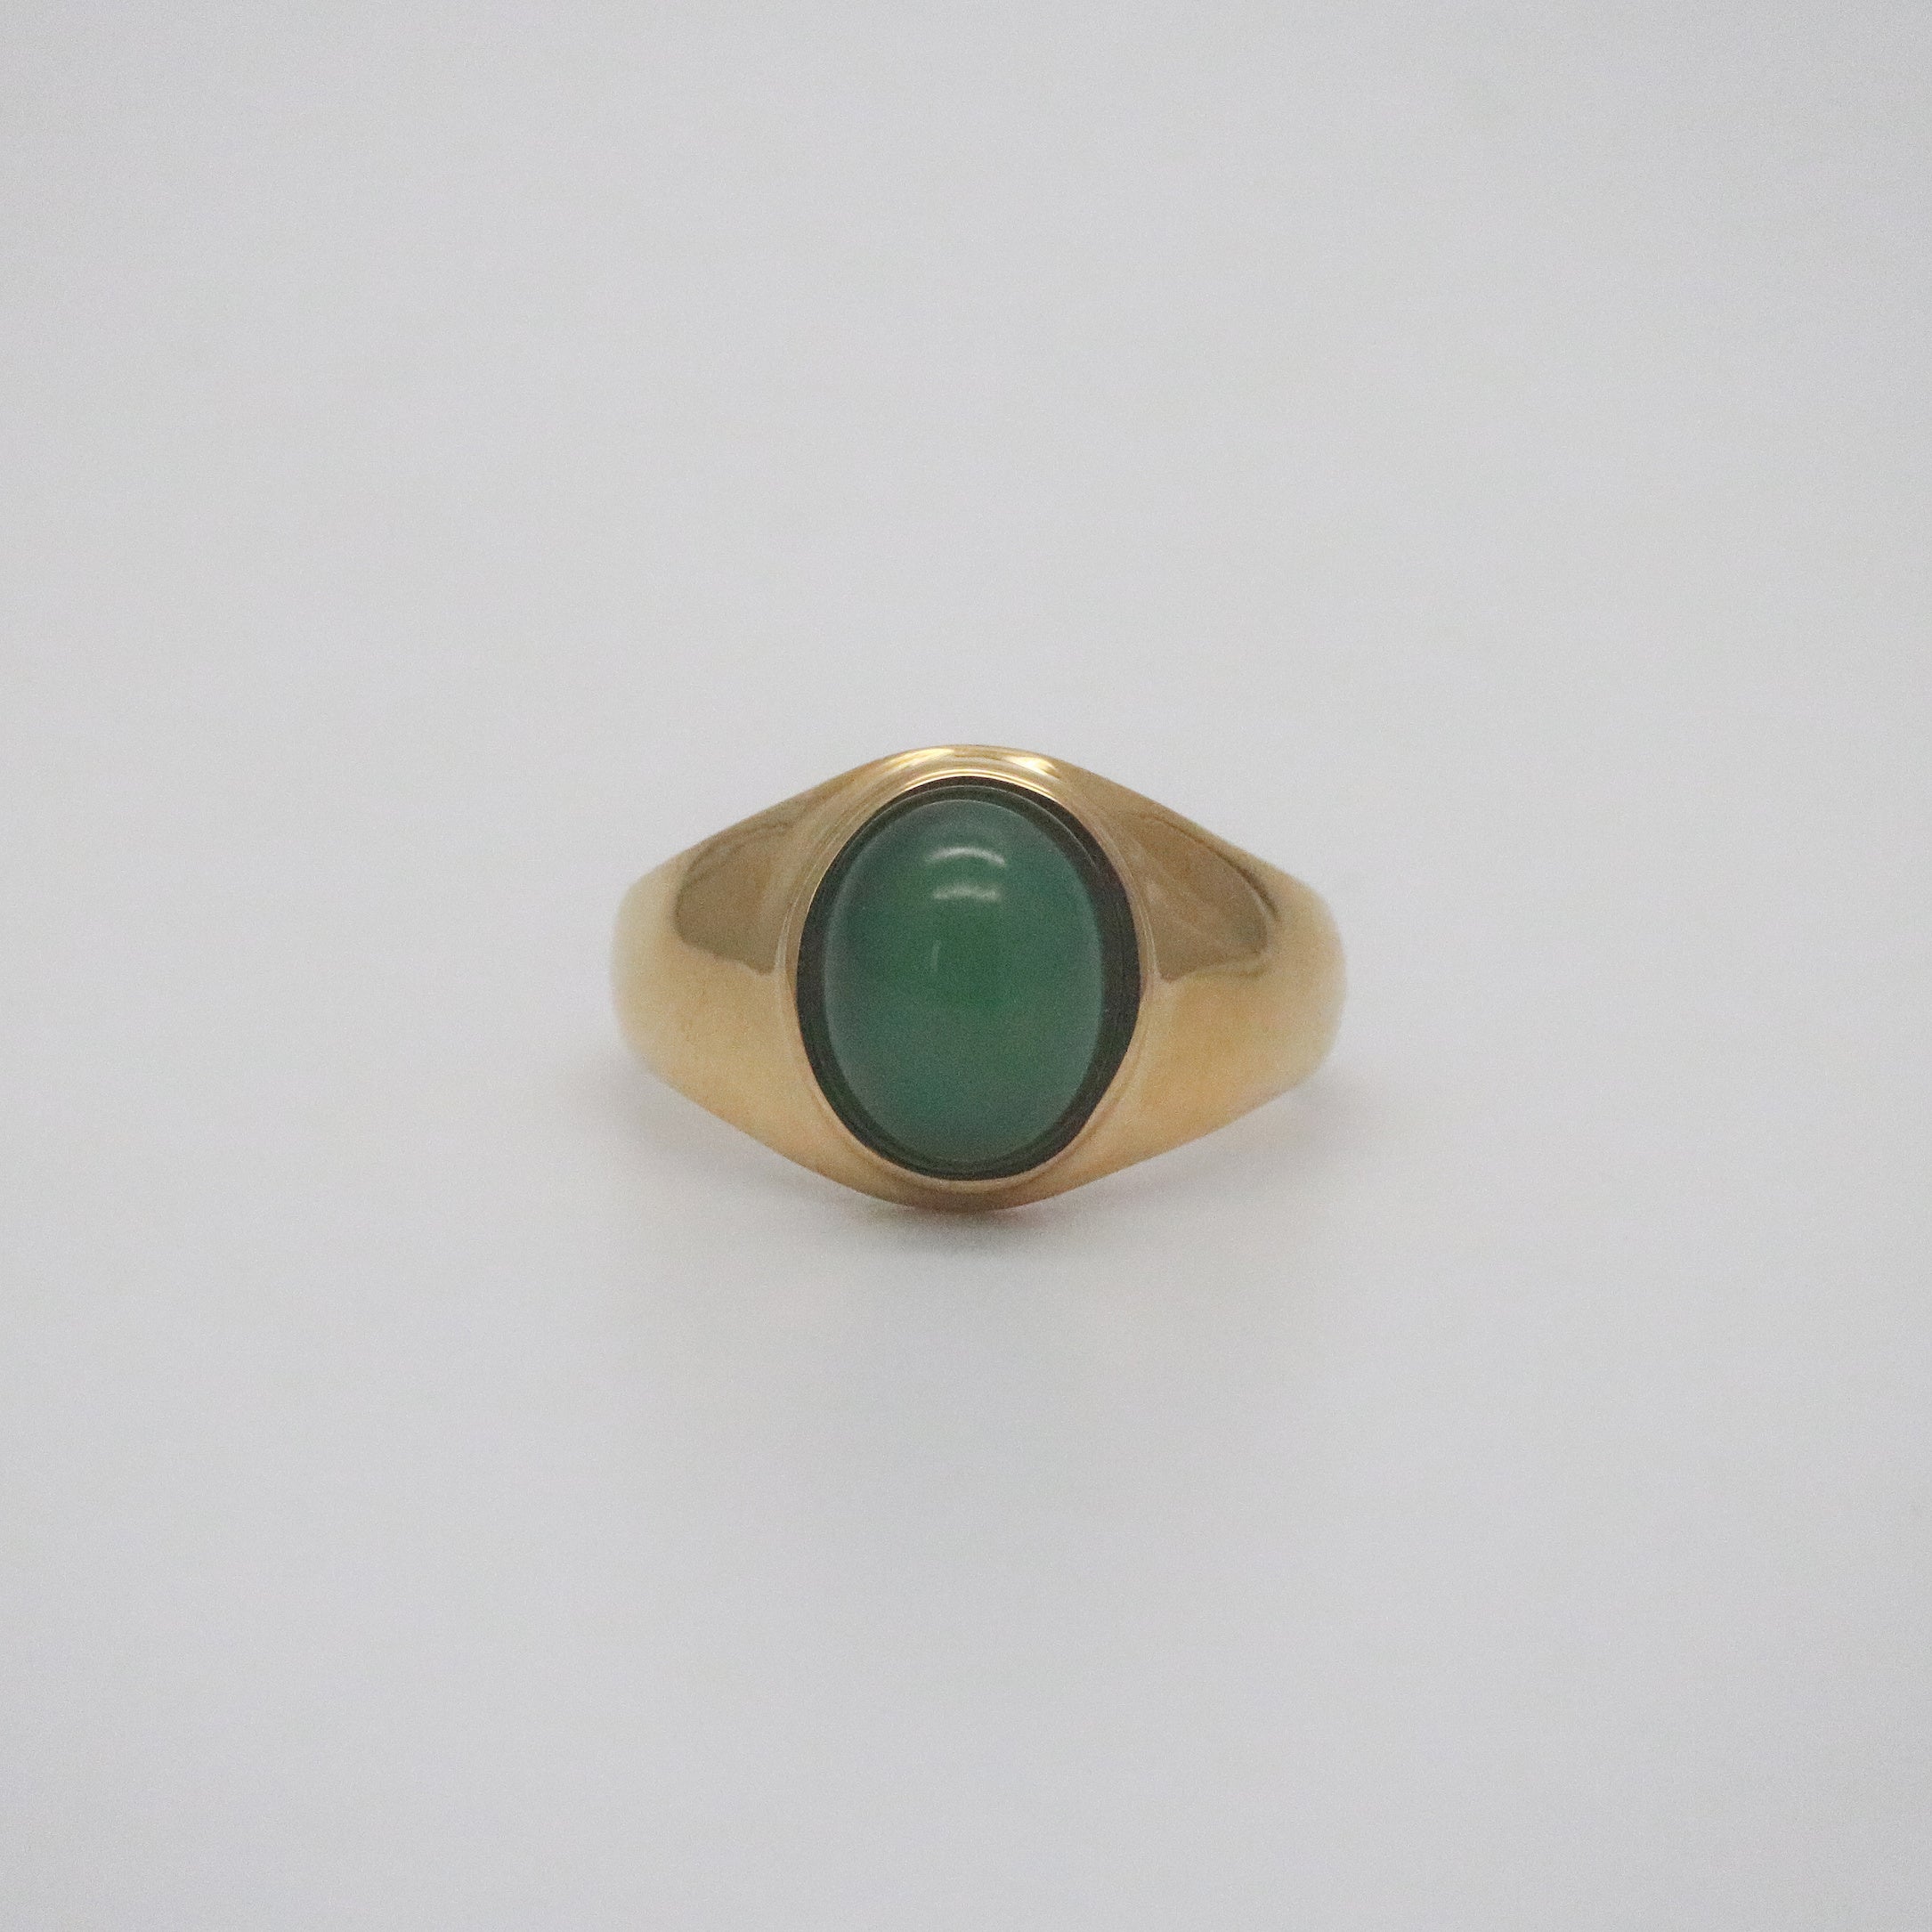 Oval Jade Ring